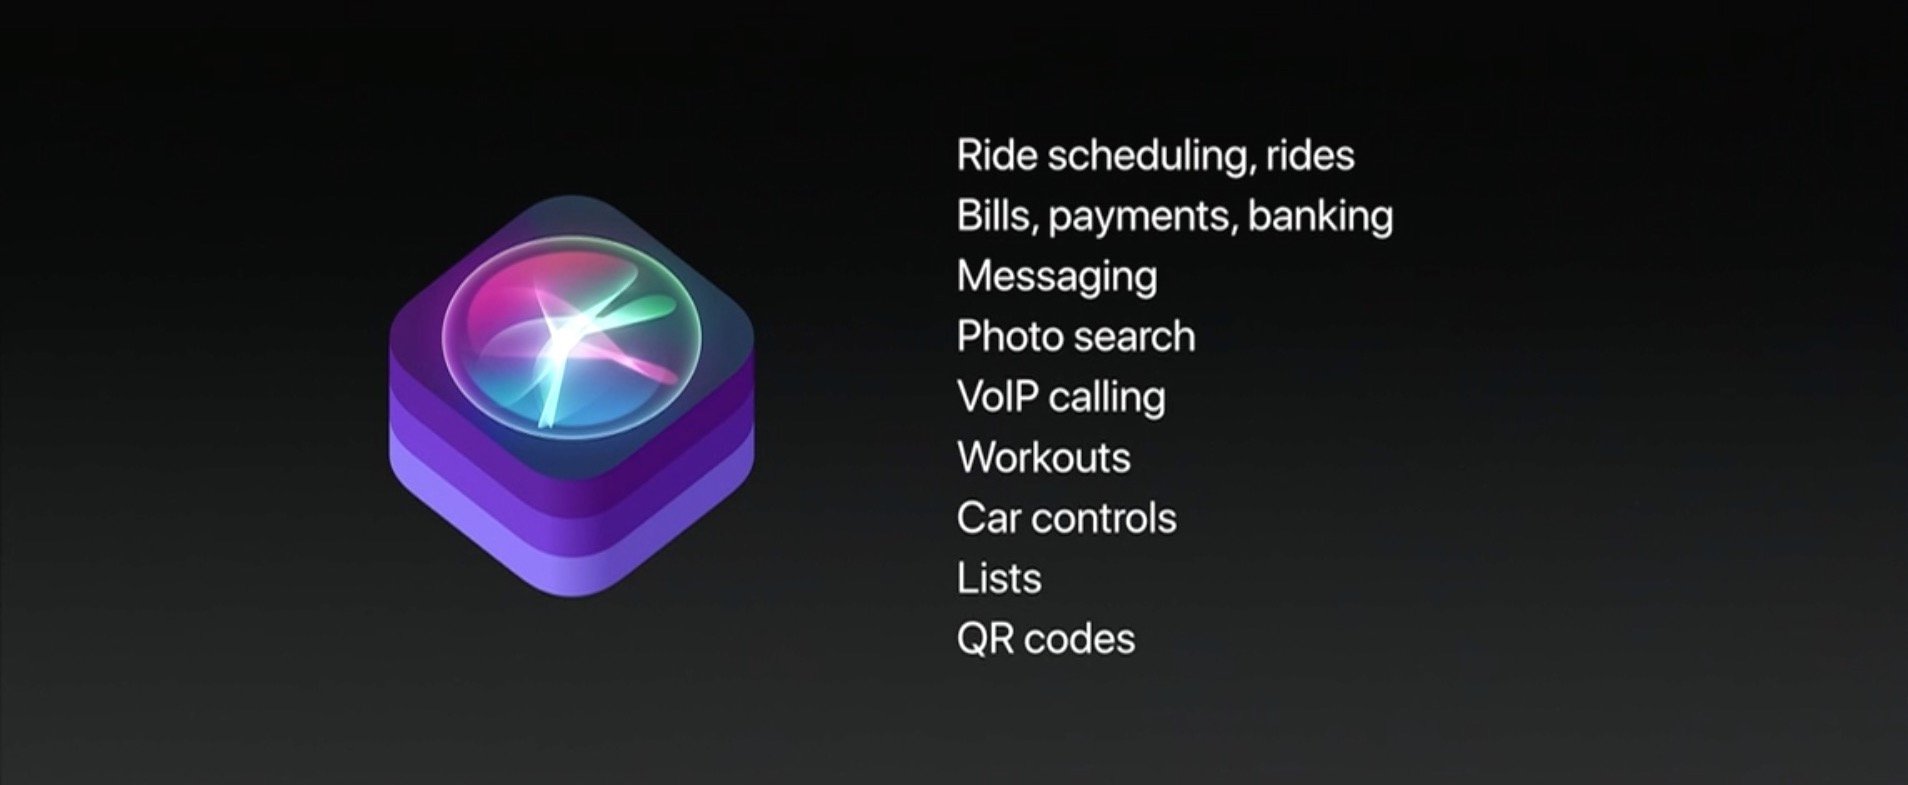 「iOS 11」の新機能と変更点まとめ